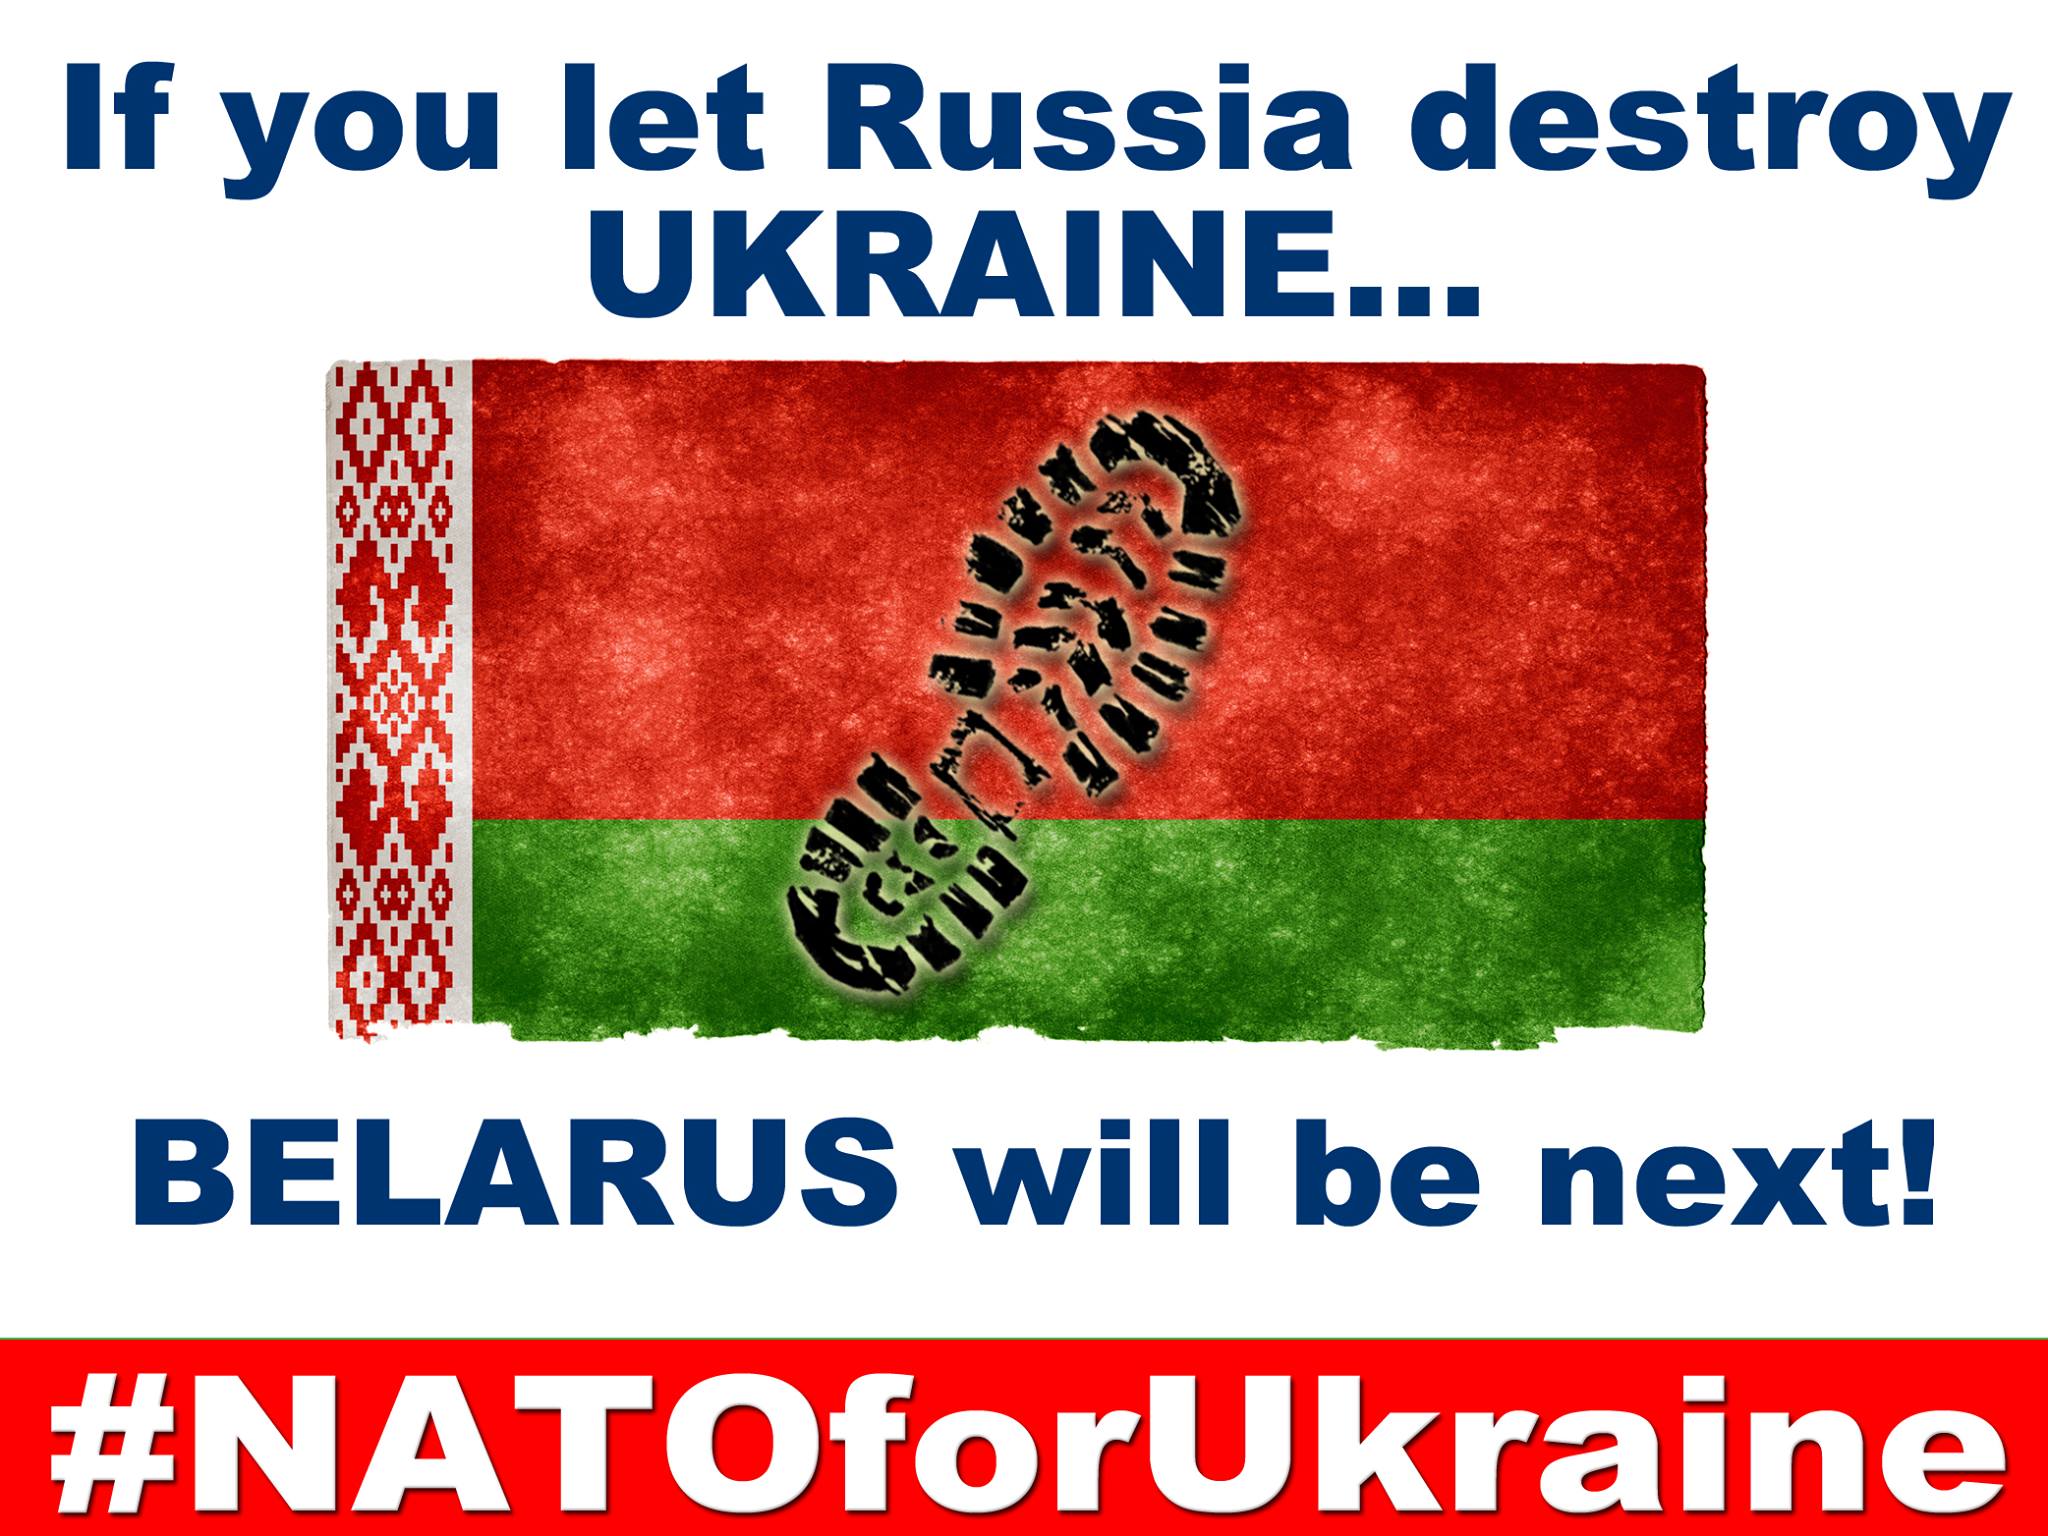 #NATOforUkraine twitter storm ~~